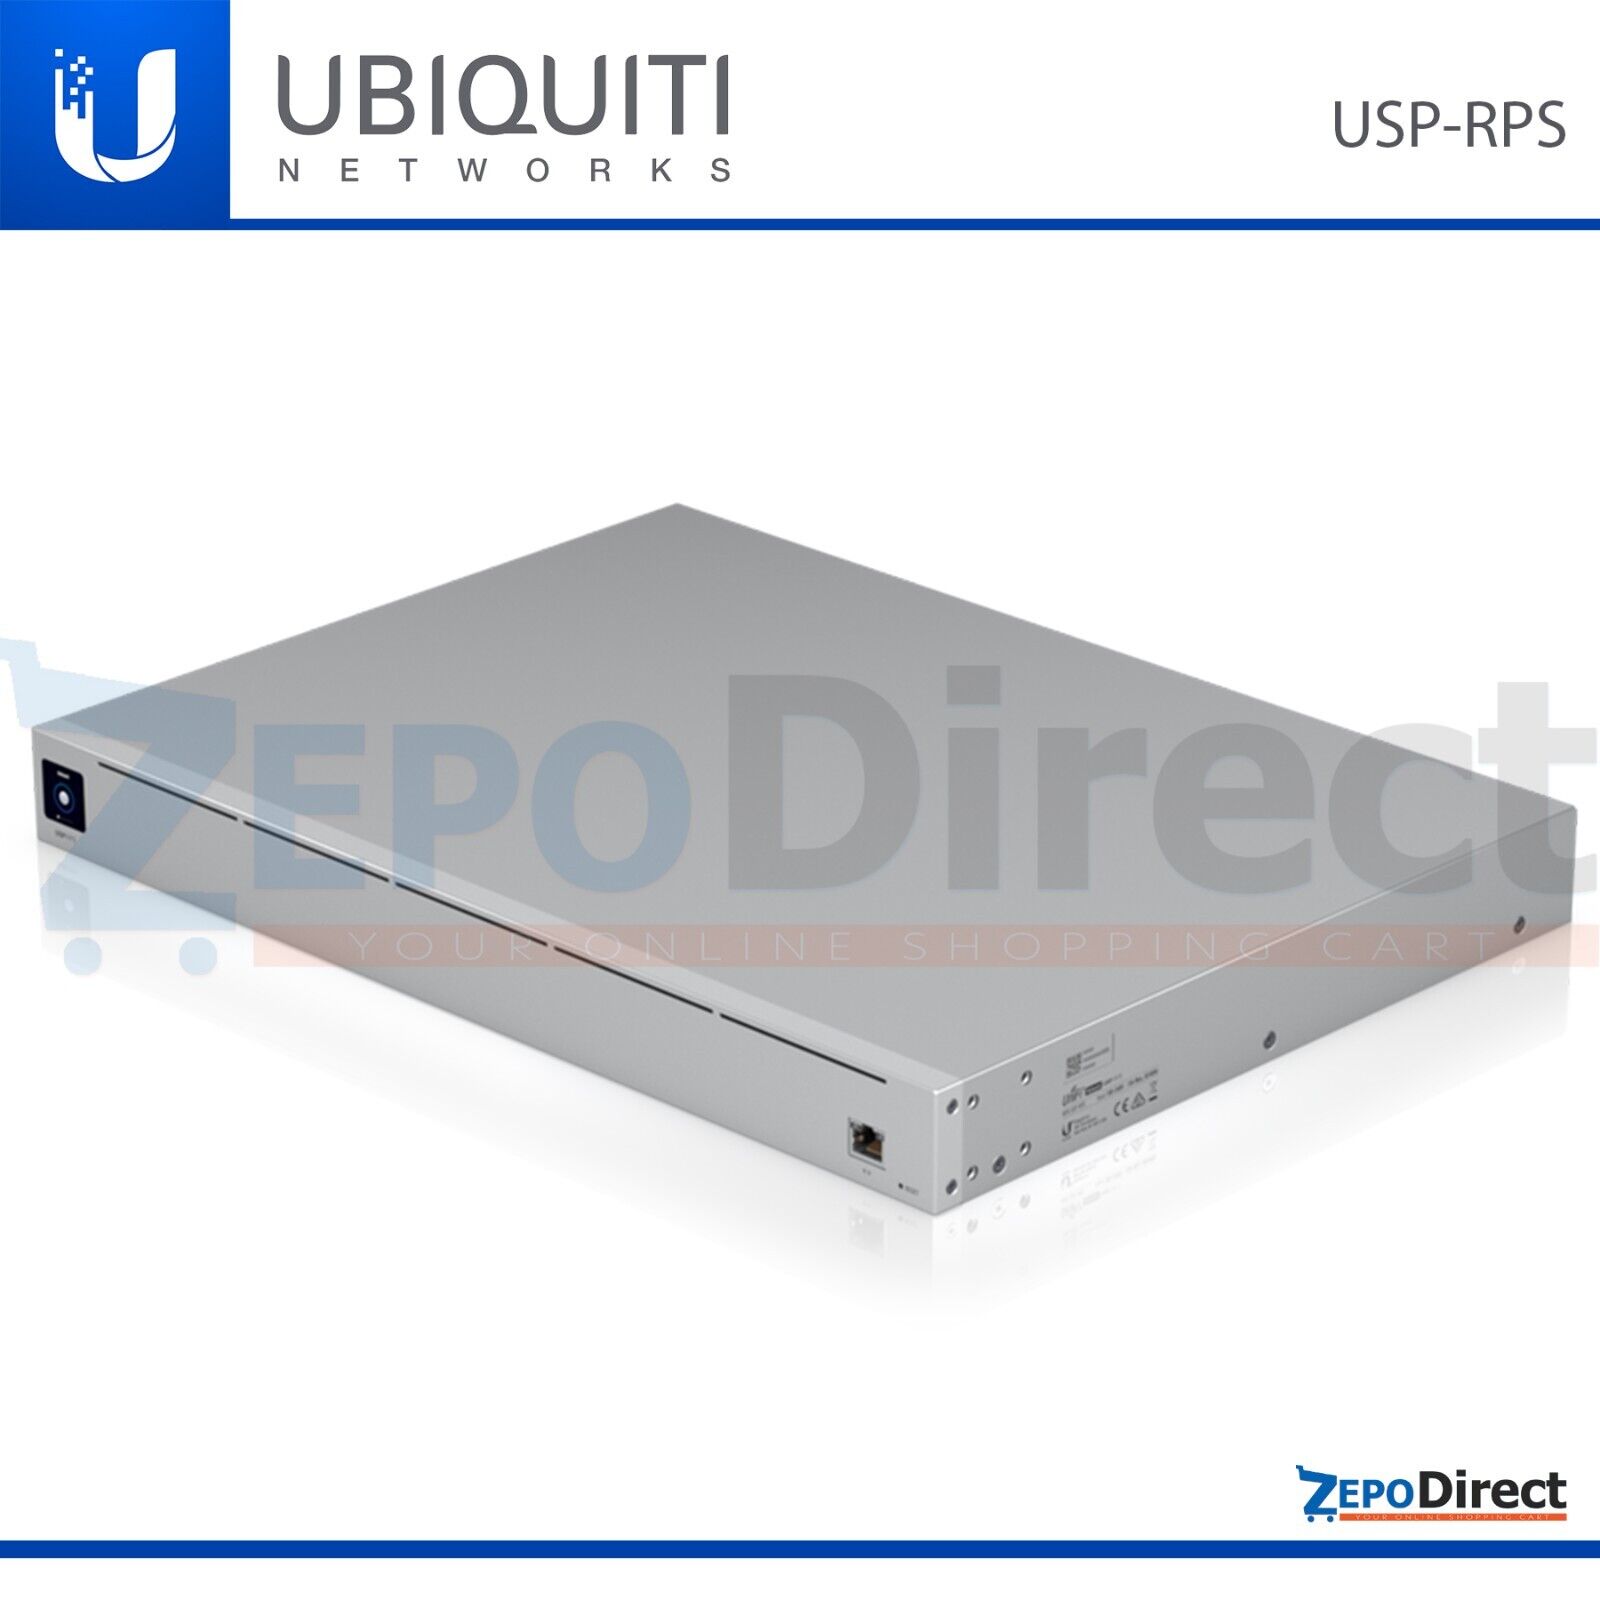 Ubiquiti UniFi Smart Power Redundant Power System USP-RPS